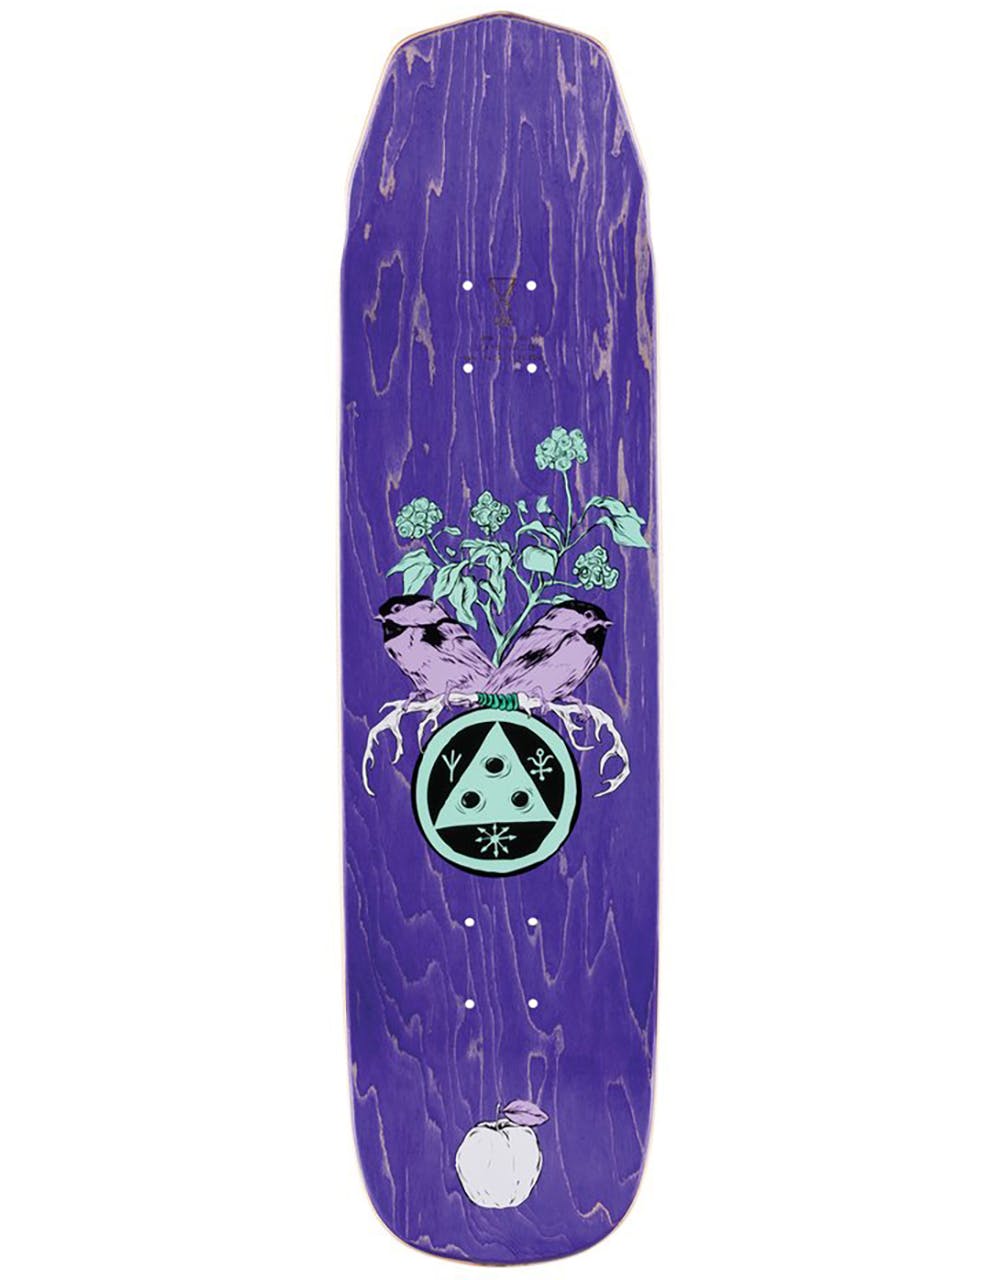 Welcome Fairty Tale on Wicked Princess Skateboard Deck - 8.125"